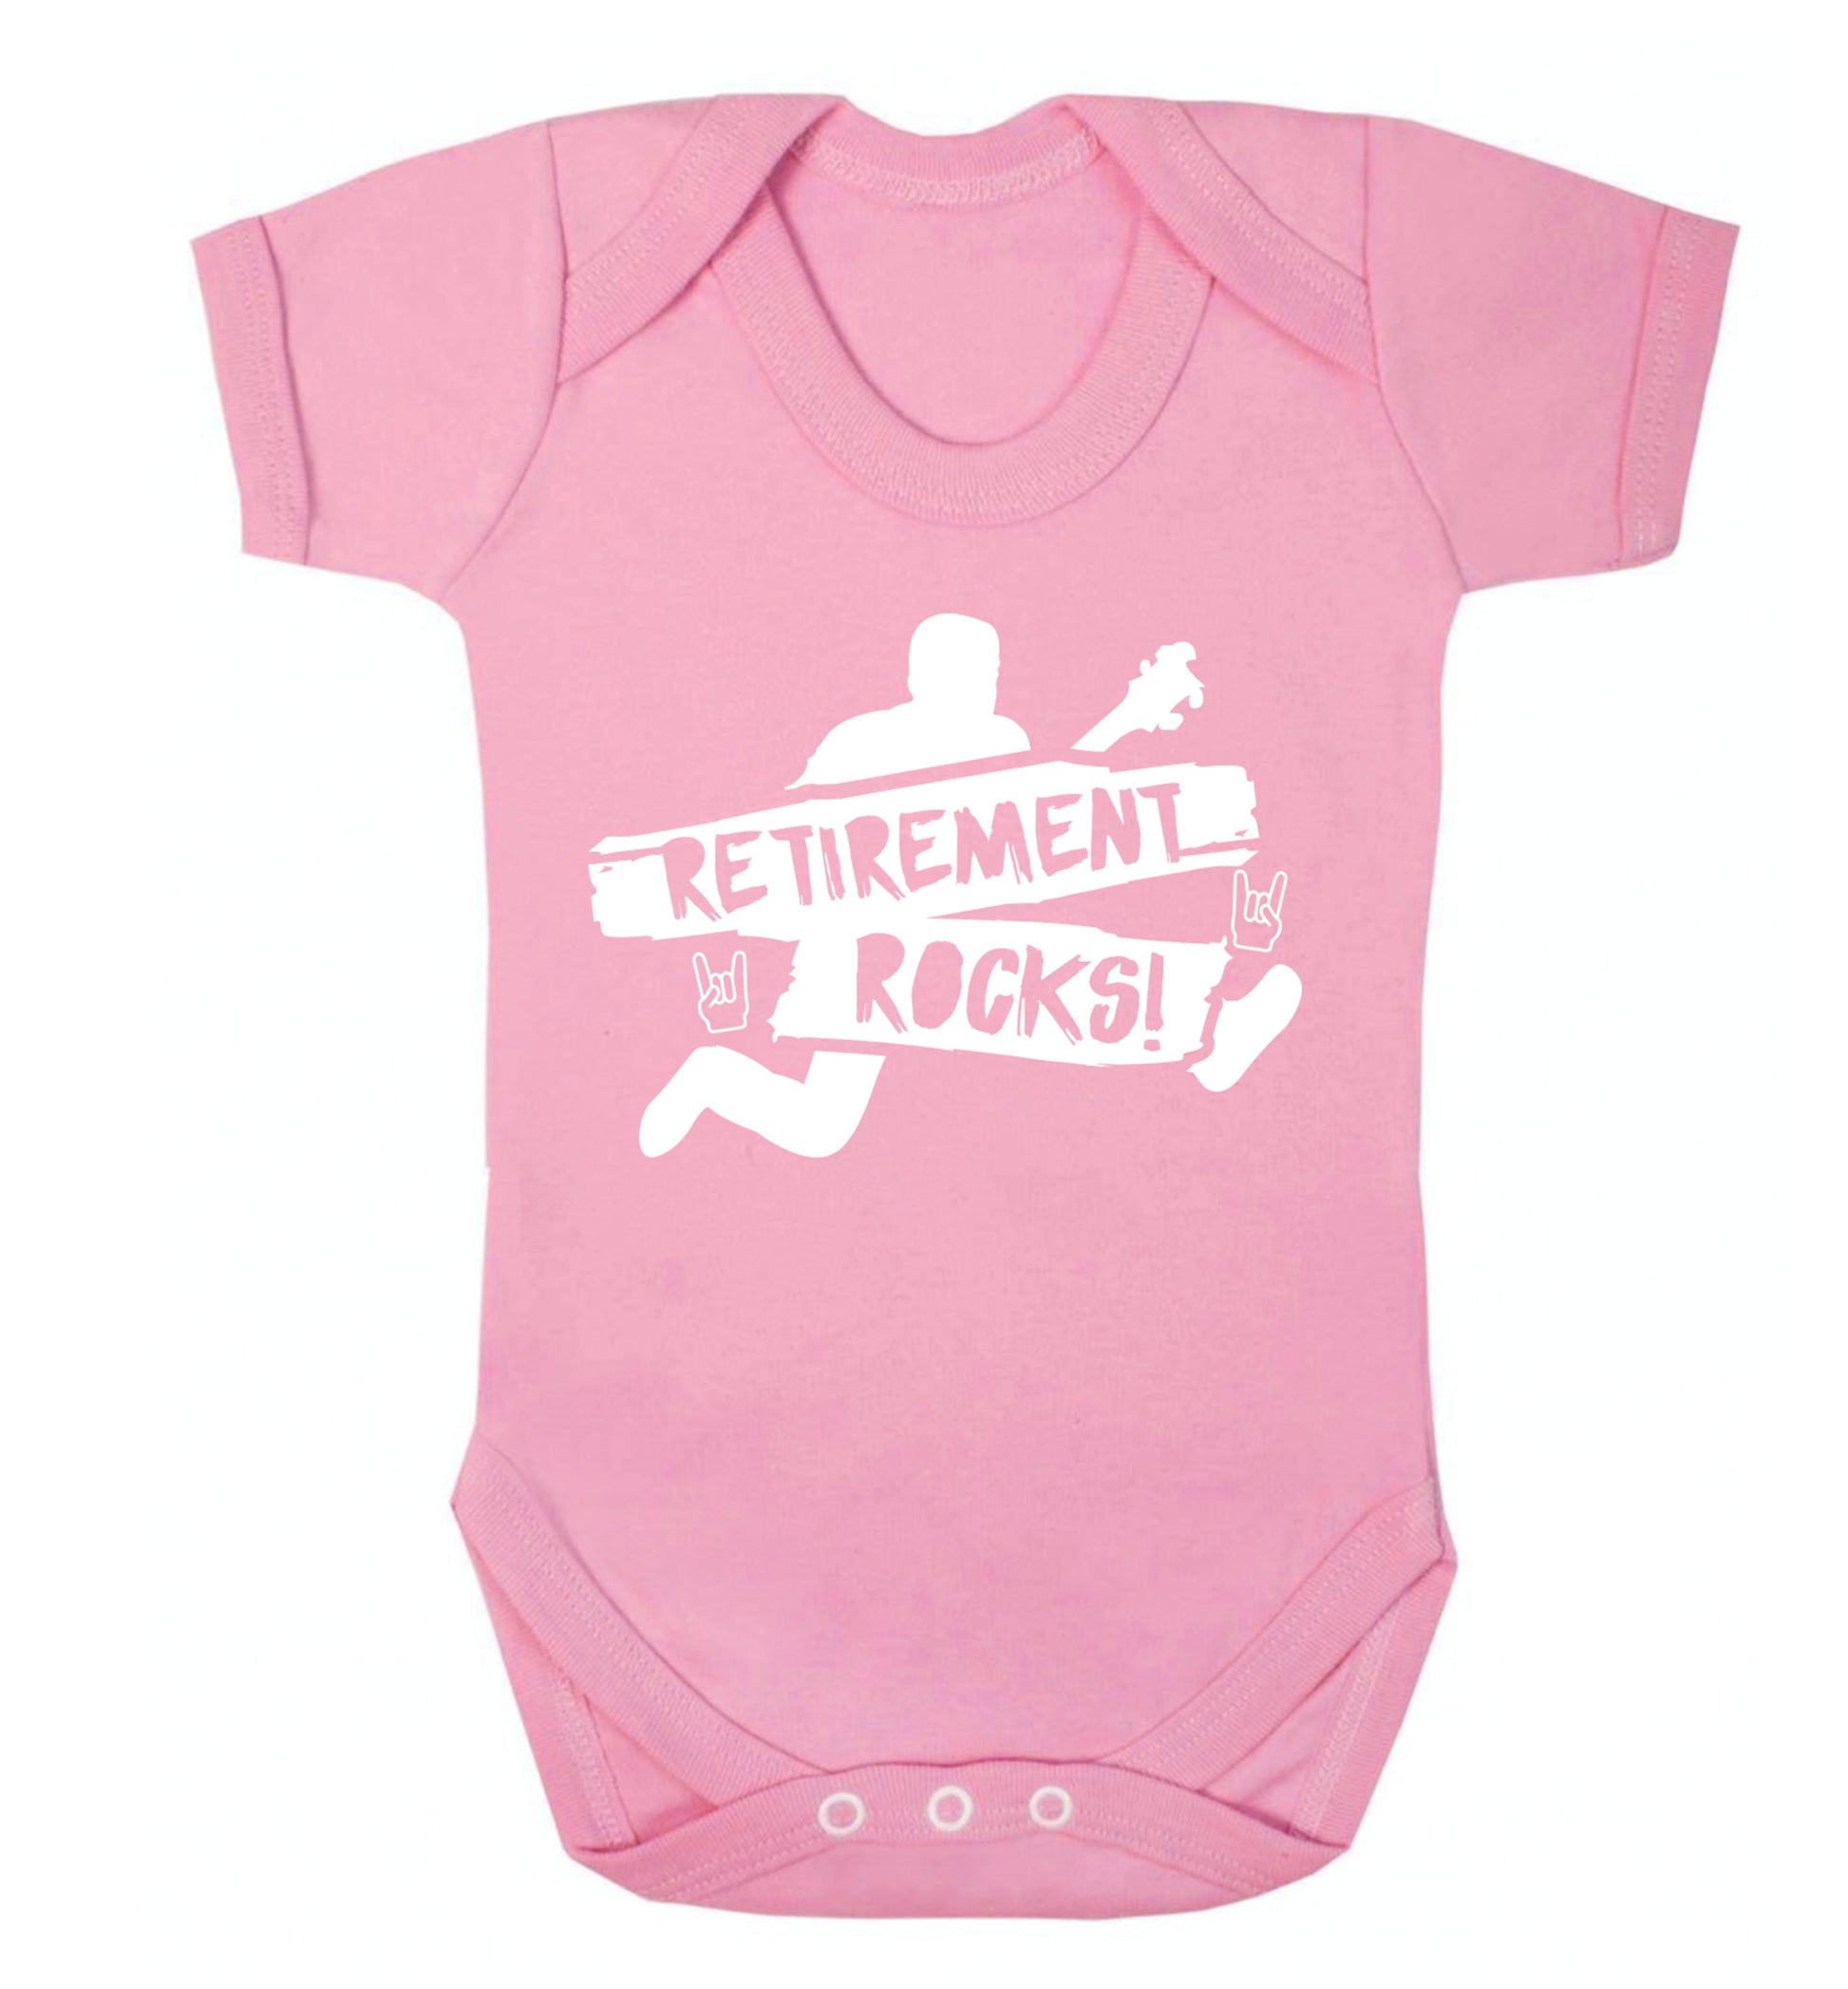 Retirement Rocks Baby Vest pale pink 18-24 months